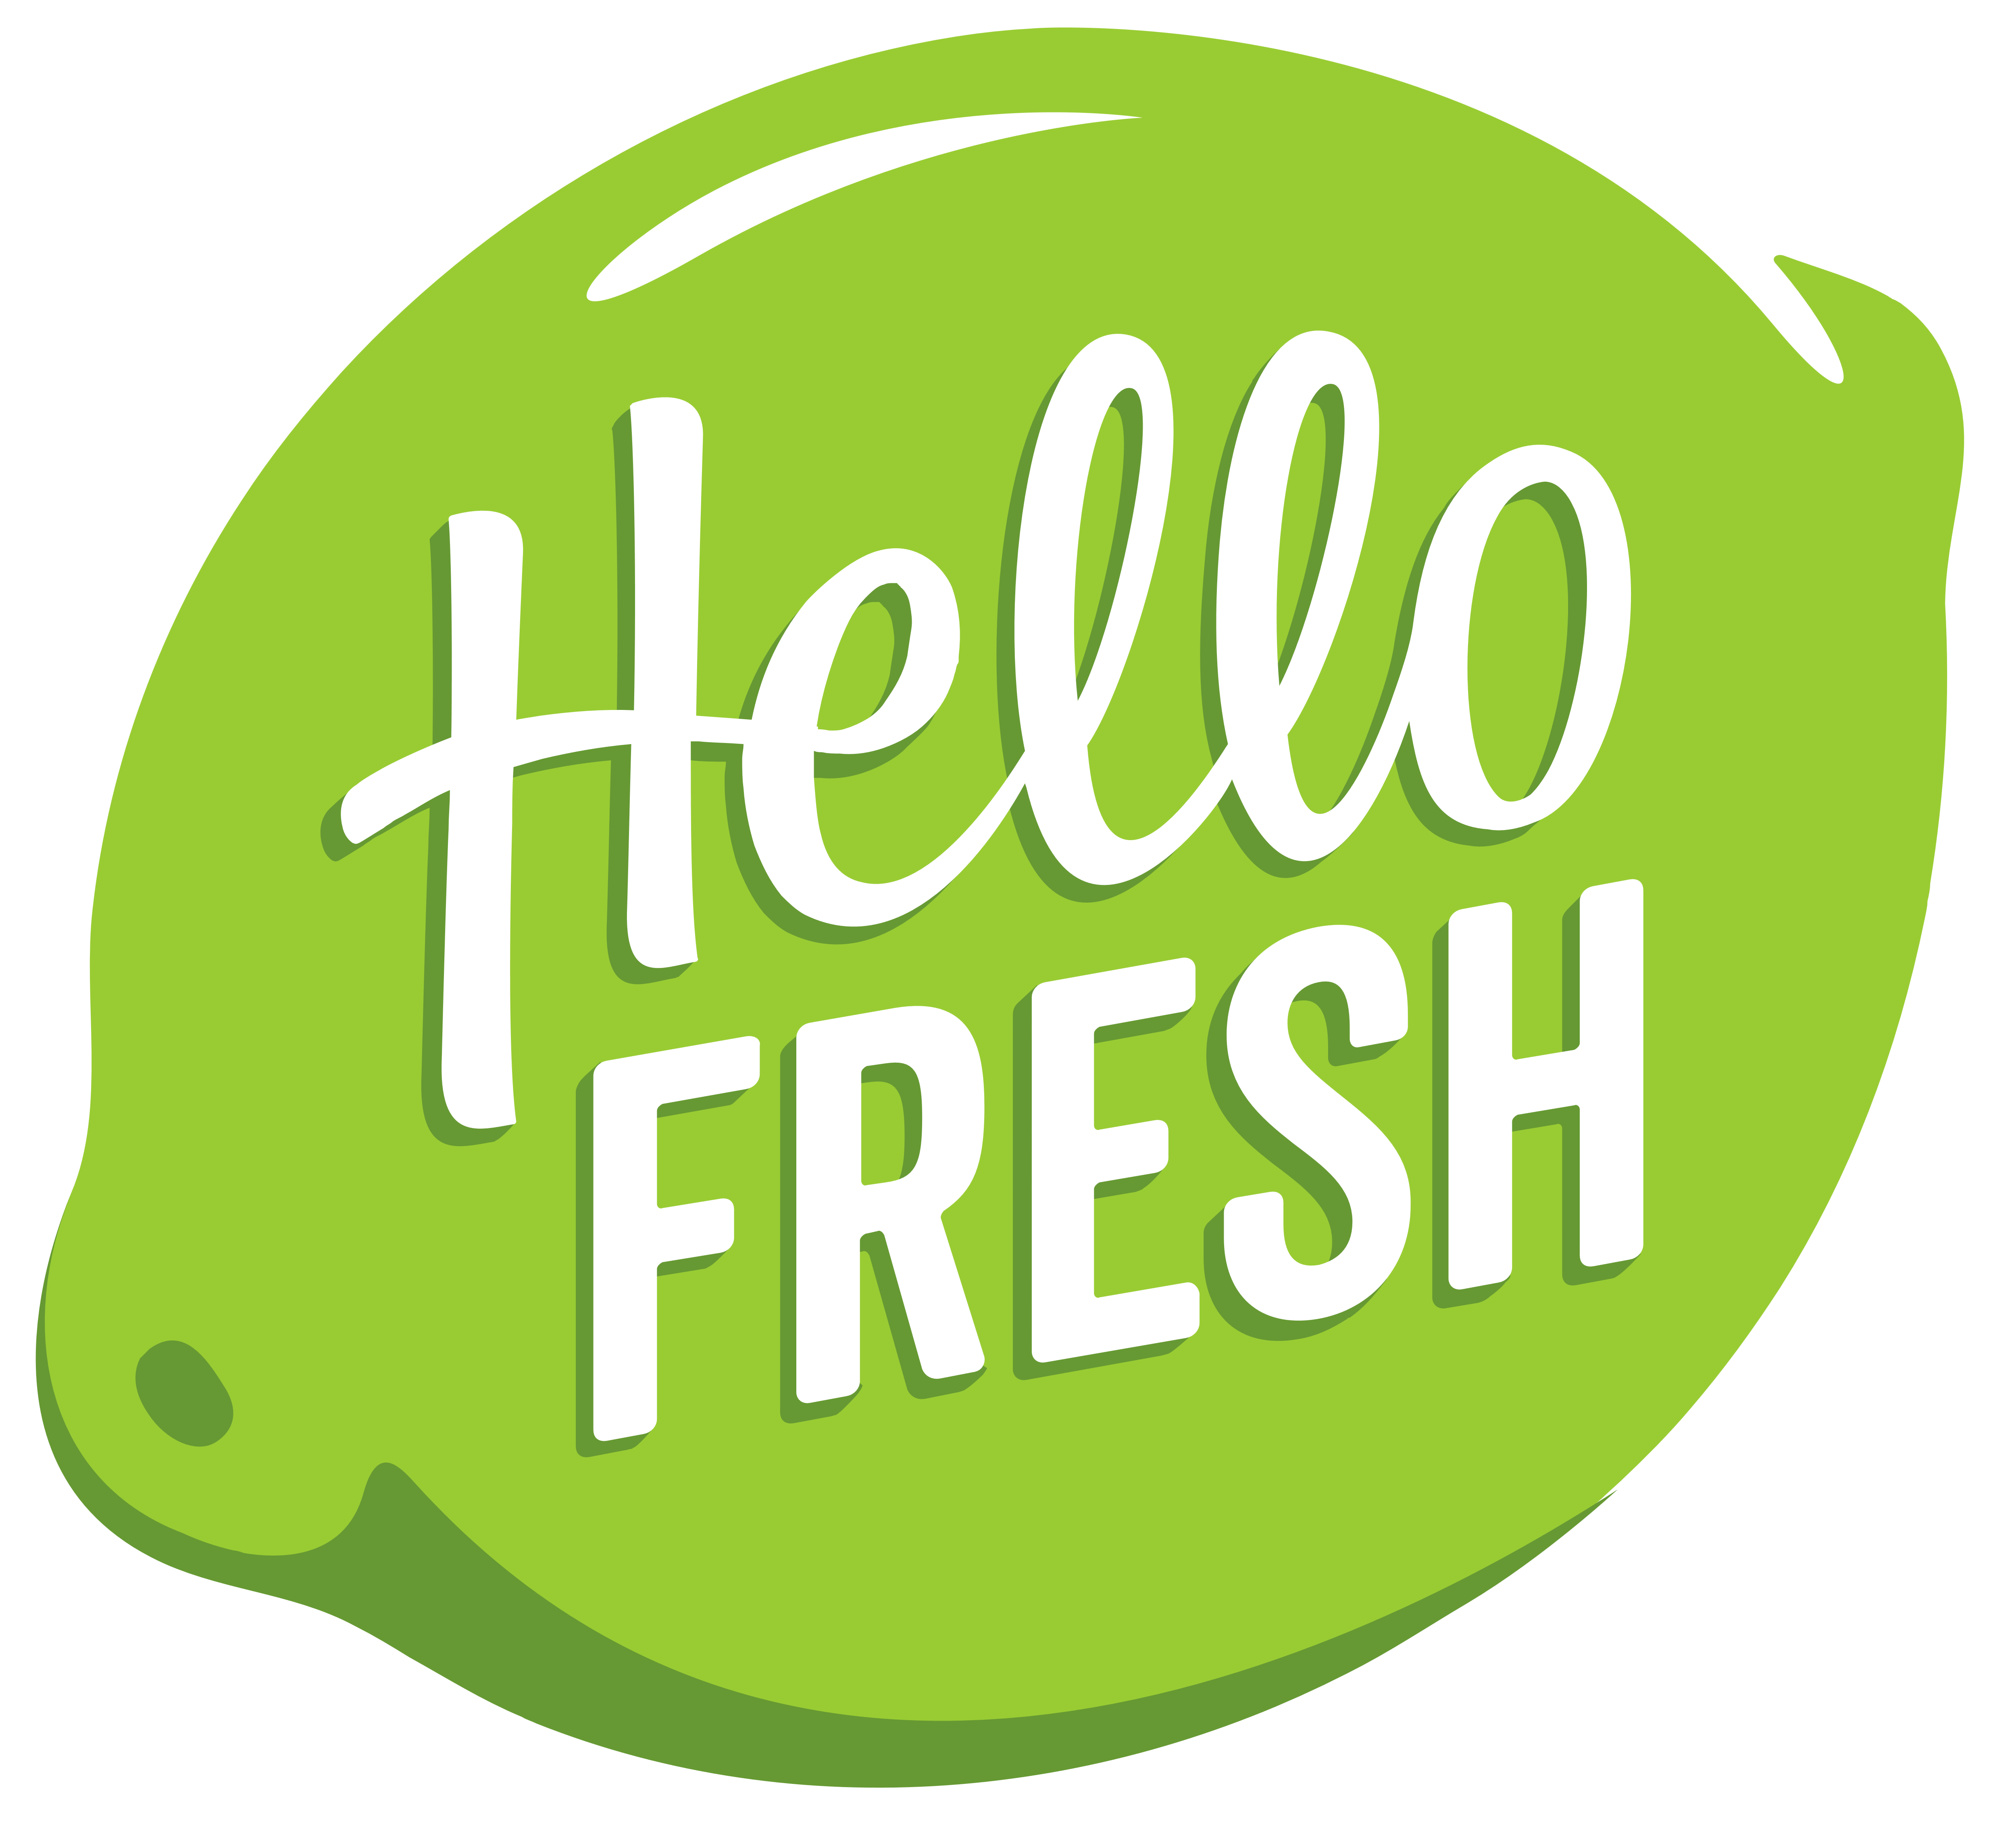 Hellofresh Hello Fresh Logos Download